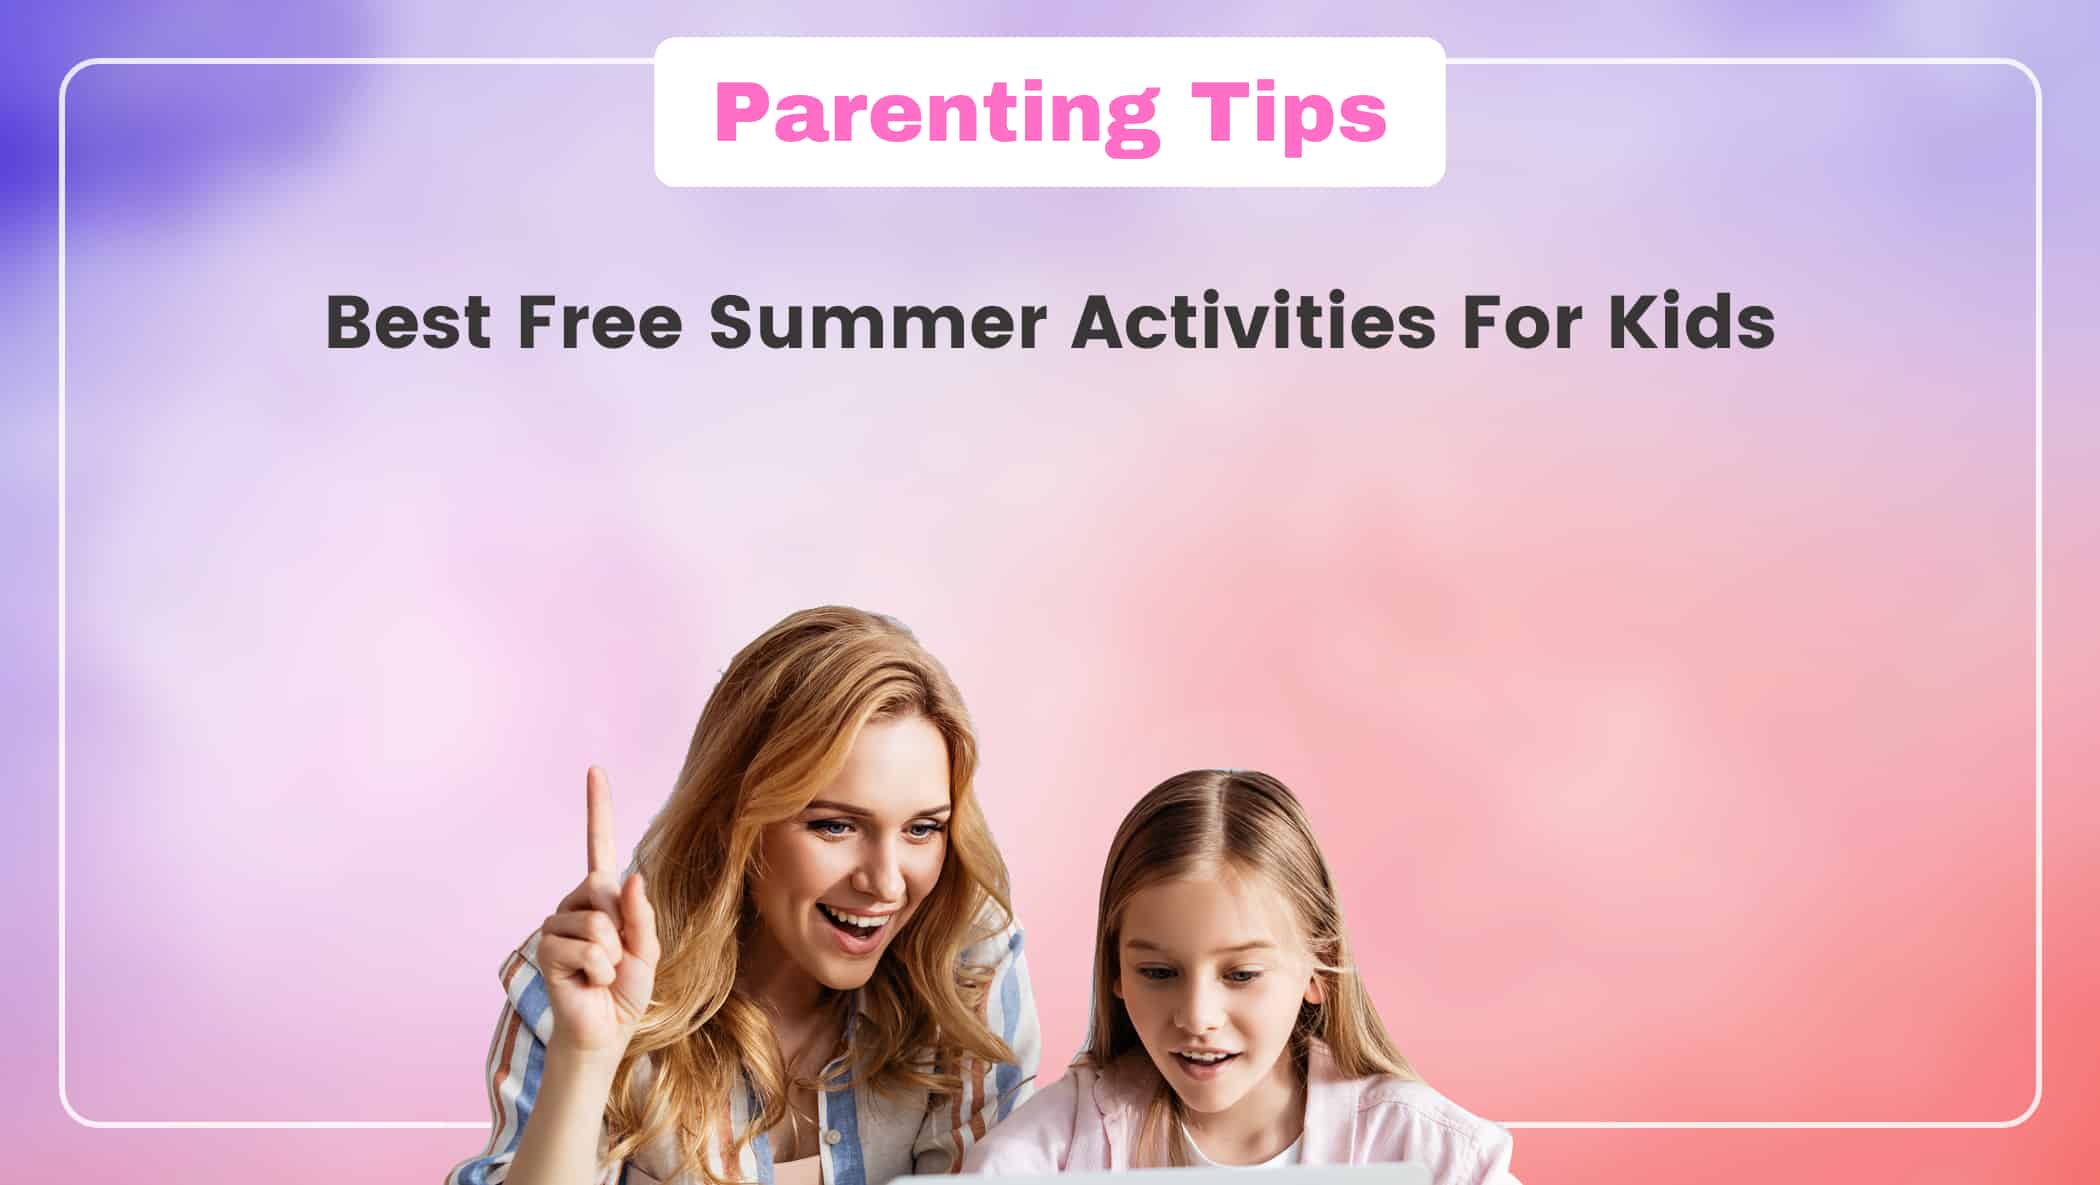 Best Free Summer Activities For Kids Image